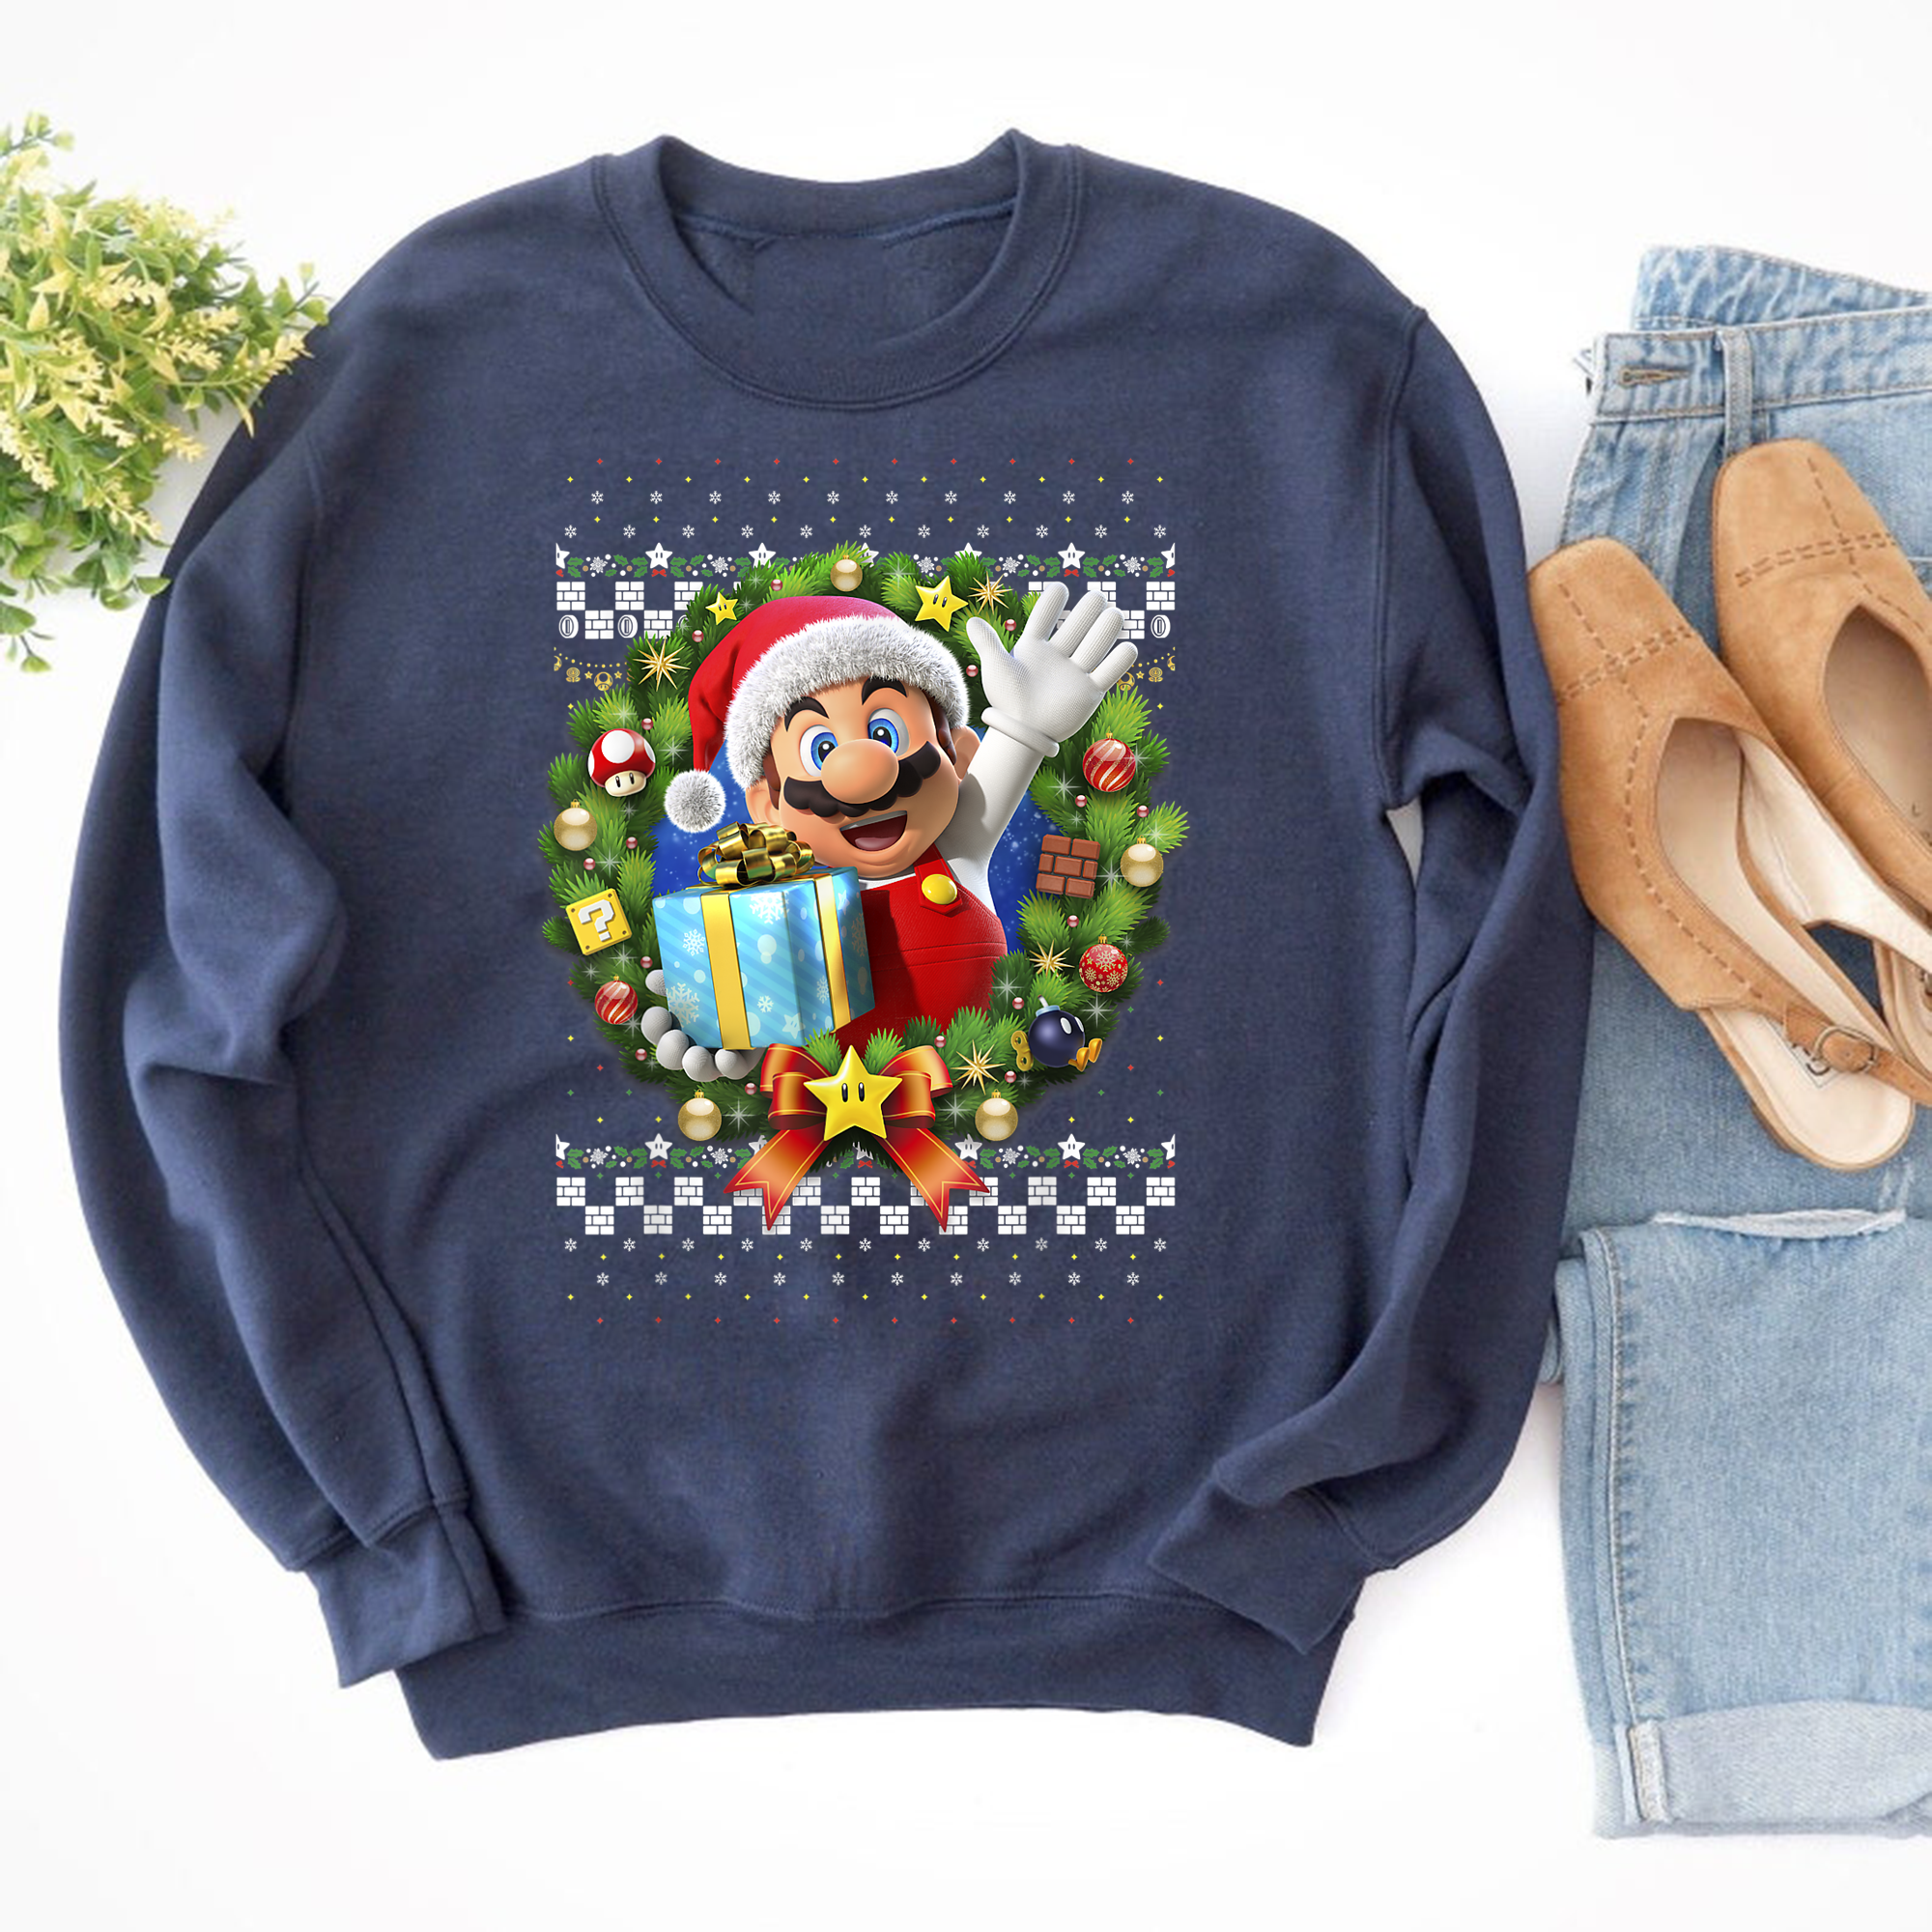 Christmas Sweatshirt, Super Mario shirt, Mario and Luigi shirt , shirt short,34,long shirt Family matching Shirt Gift, Christmas gift